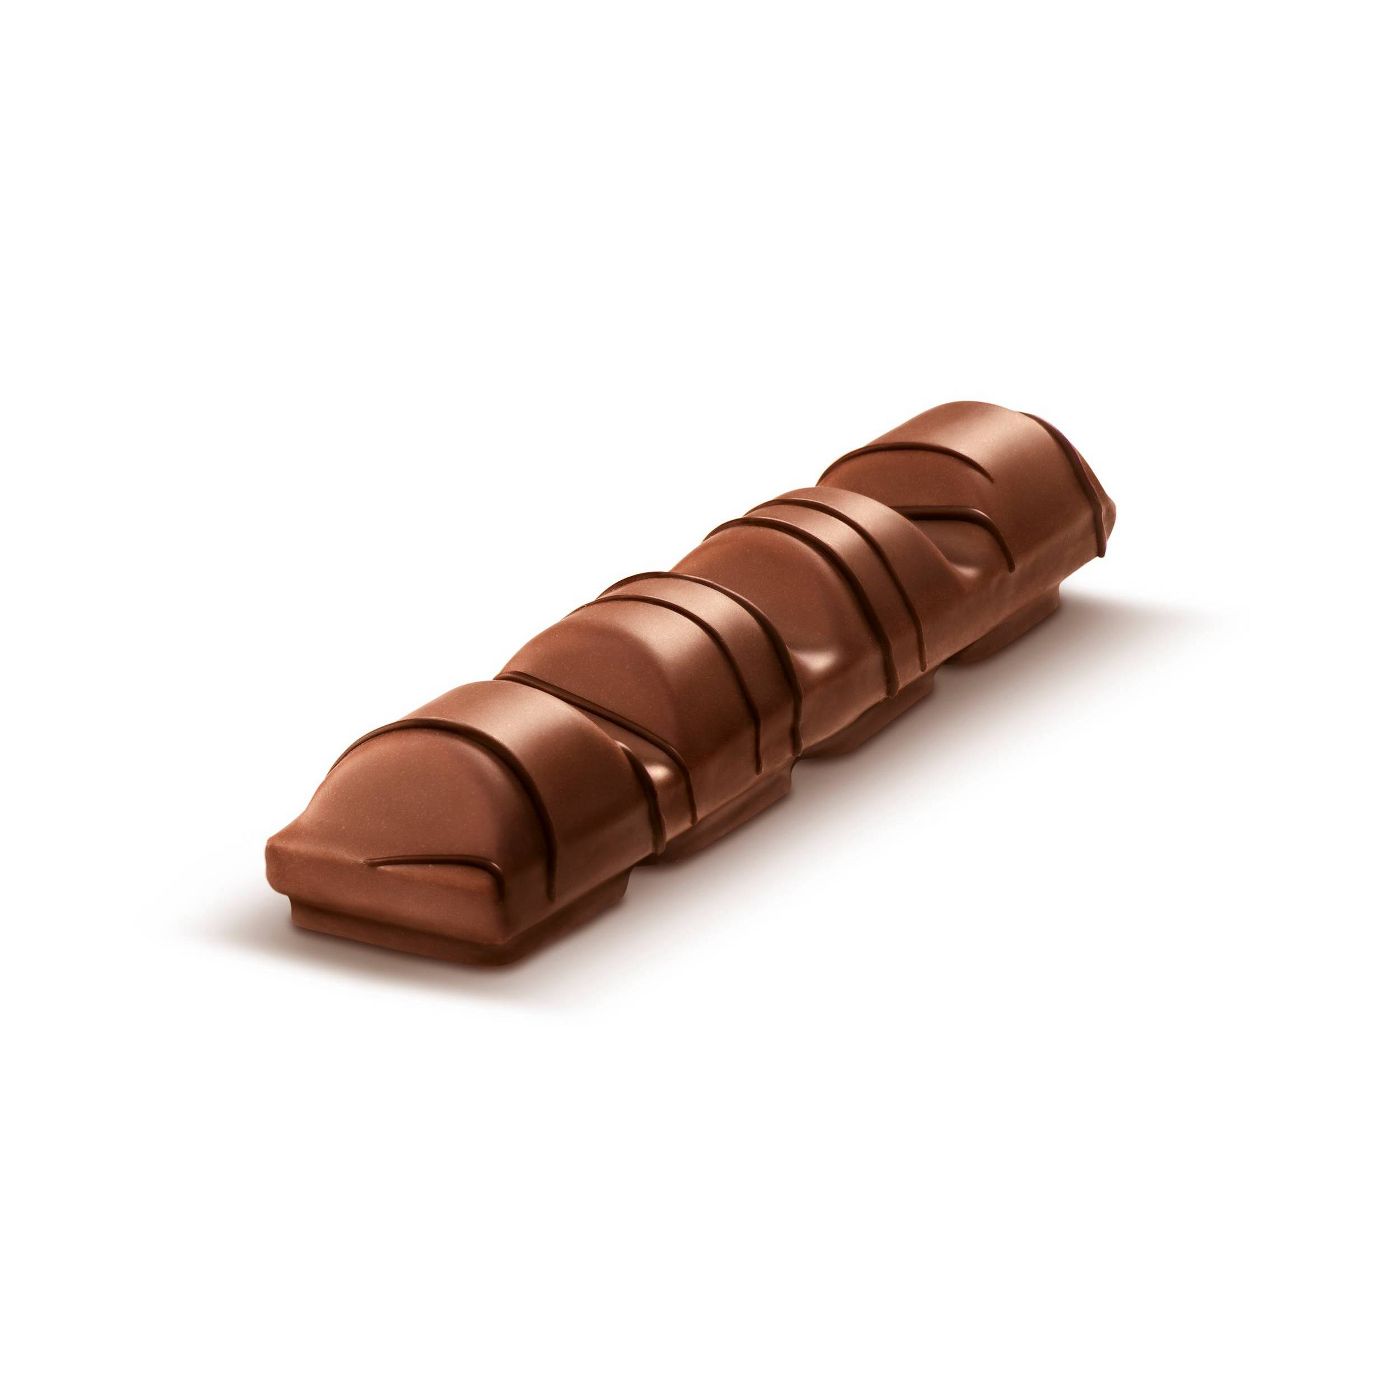 Kinder Bueno Hazelnut Chocolate Candy Bars, 1.5oz